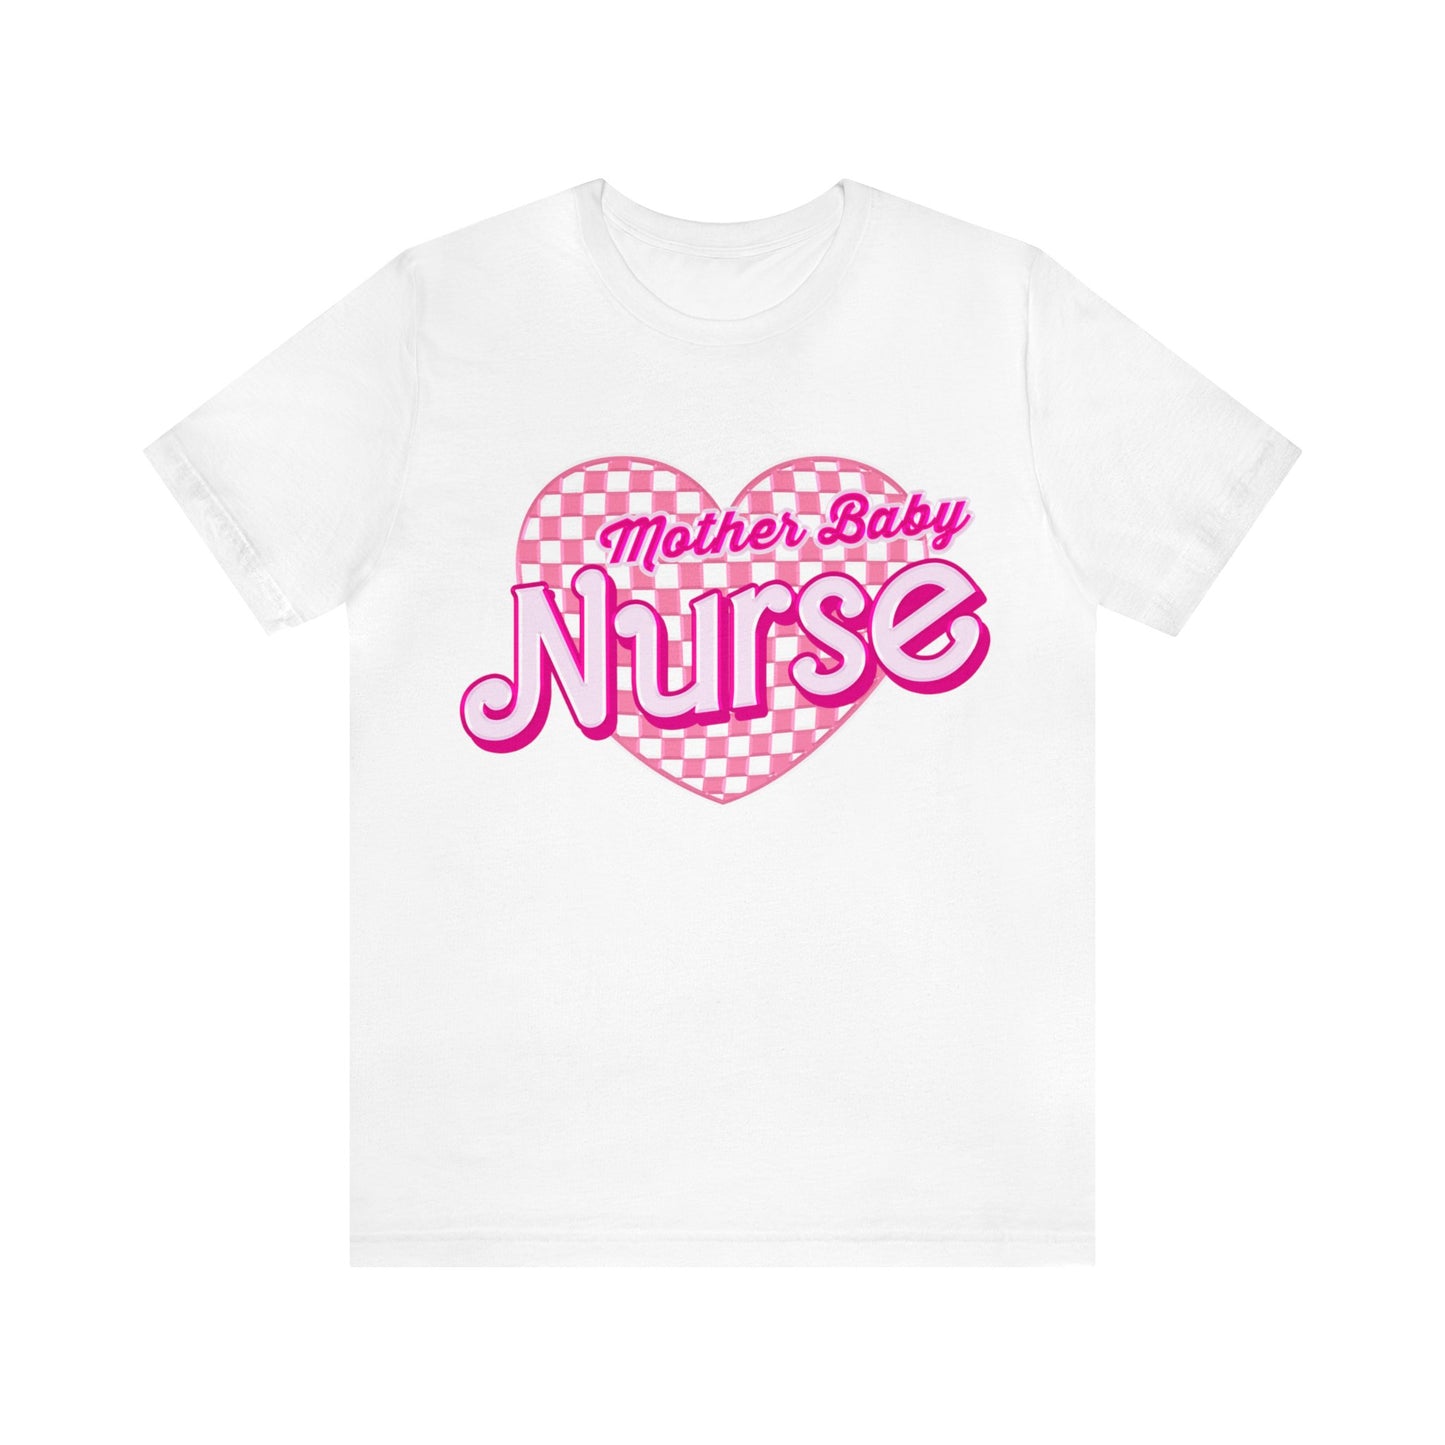 Mother Baby Nurse Shirt, Postpartum Nurse Sweater, Postpartum Nurse tshirts, Mother Baby Nurse Gifts, MBU Nurse Christmas Gifts, T946